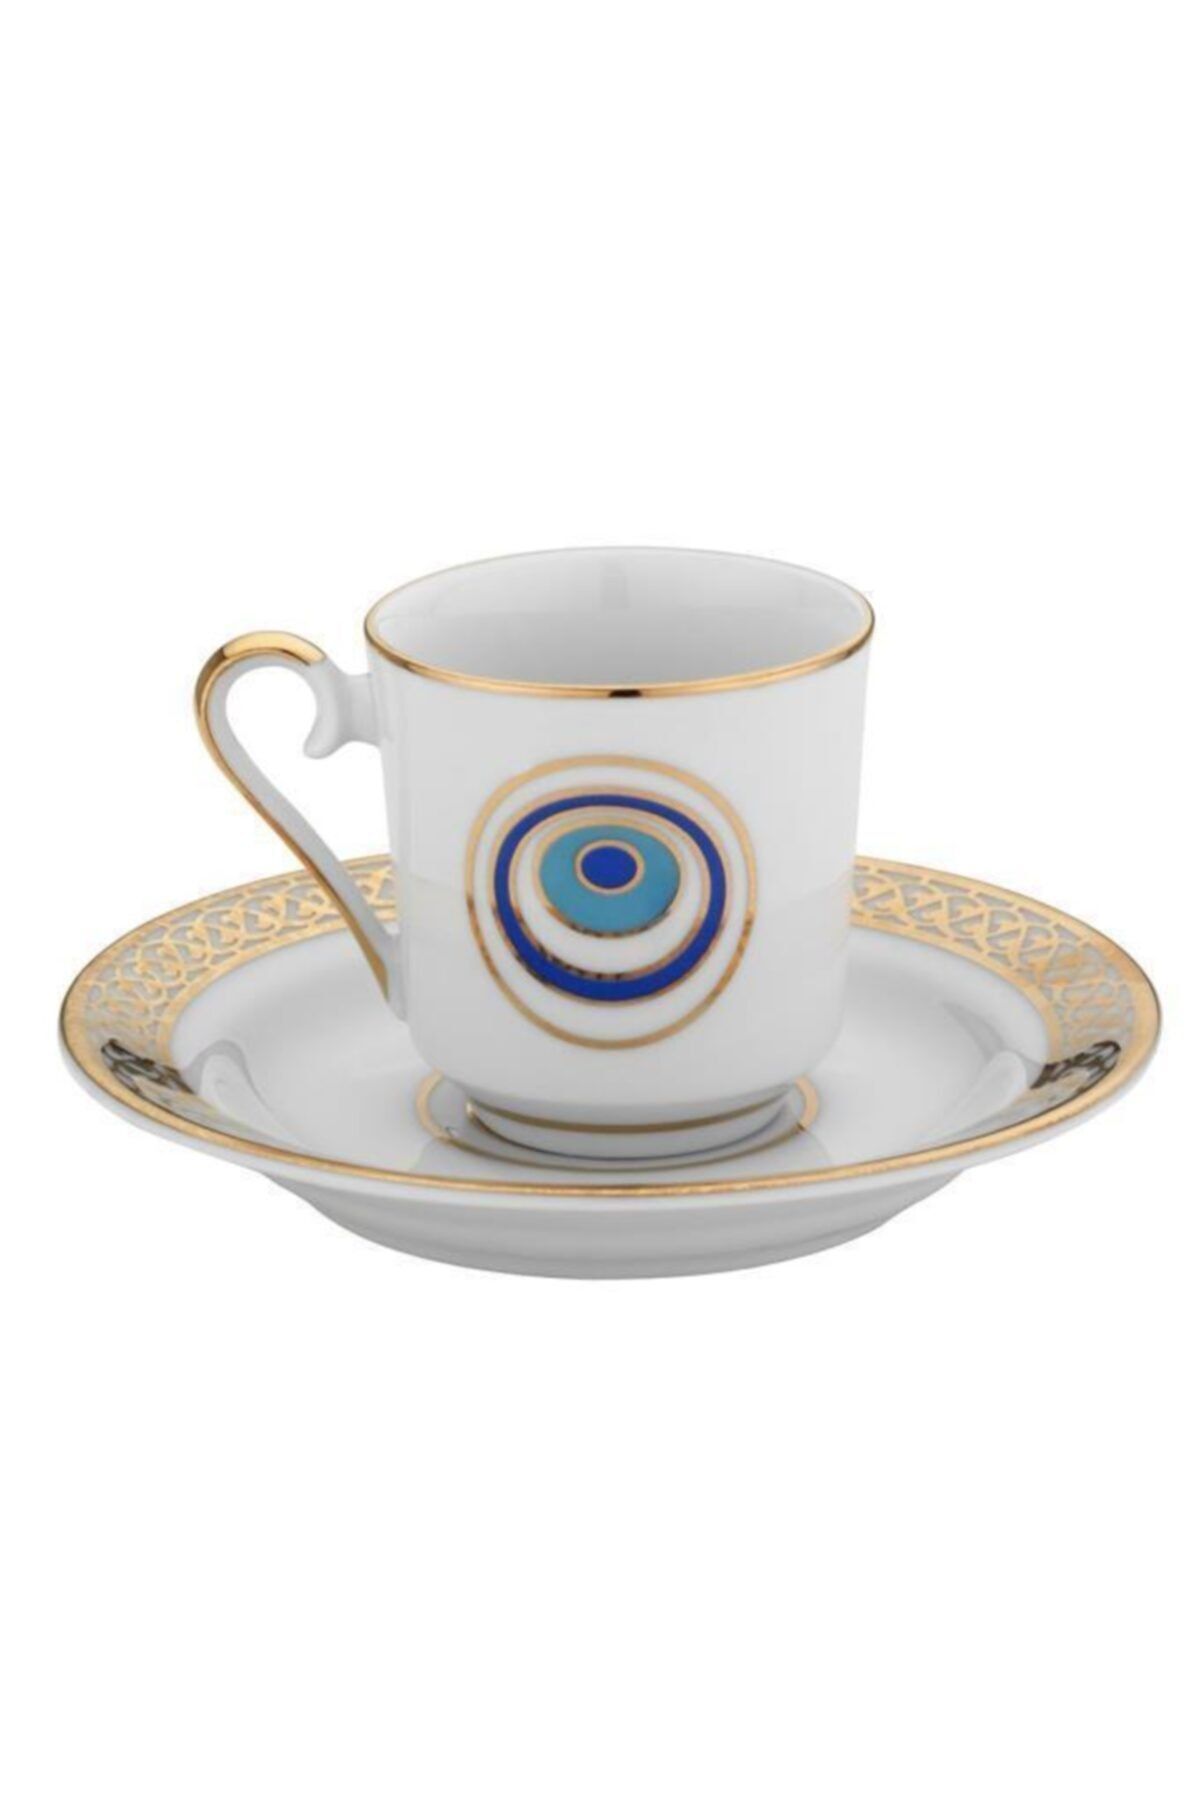 Kütahya Porselen ست فنجان قهوه با منجوق چشم بد سفید